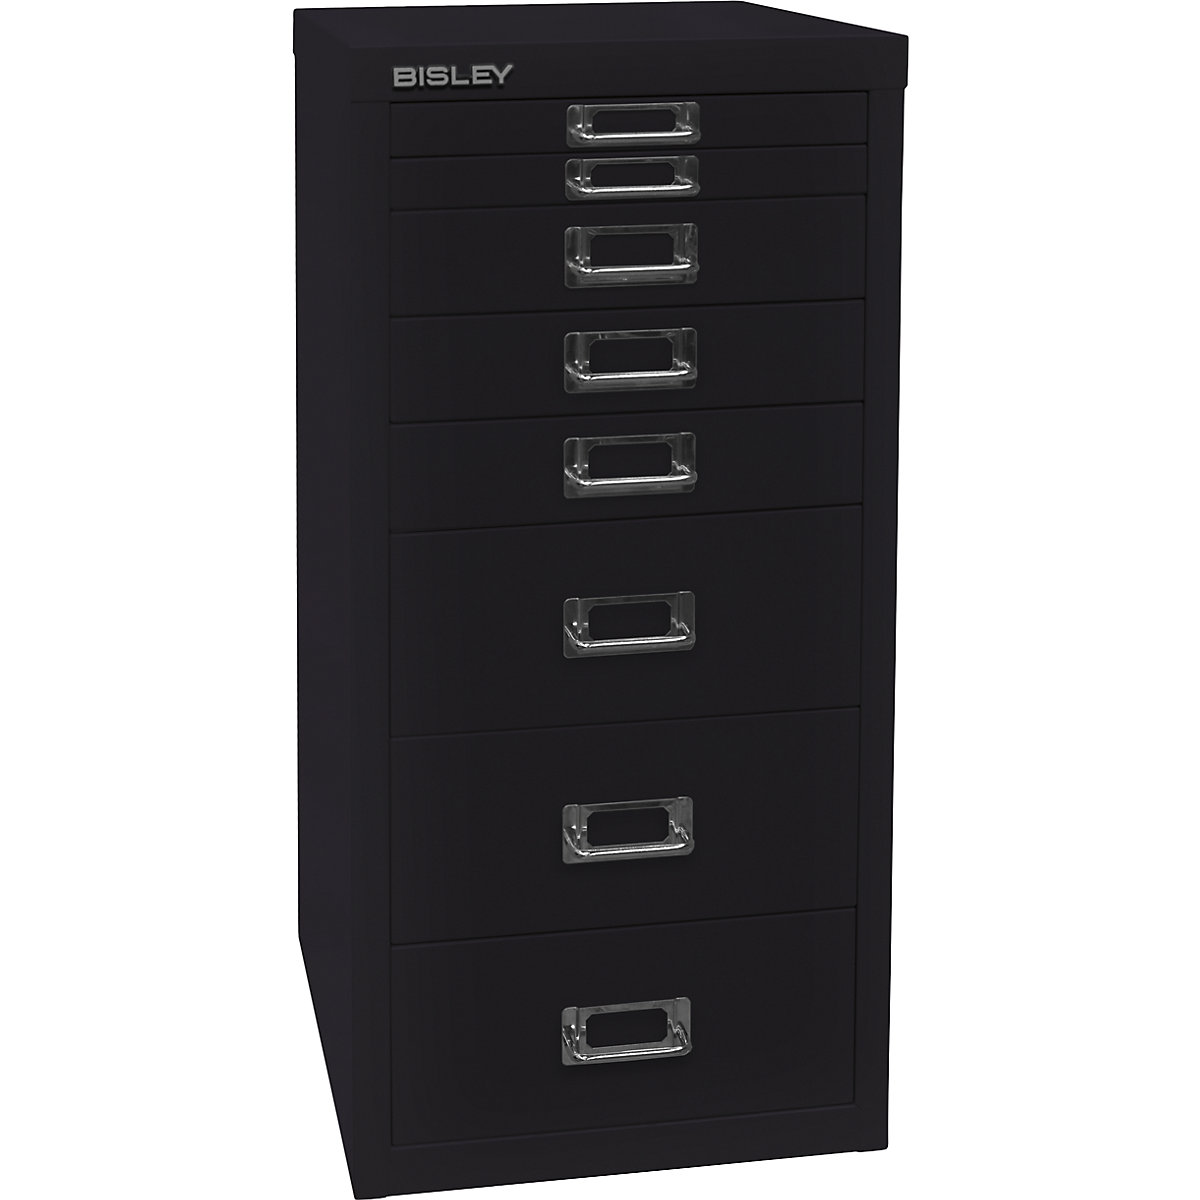 MultiDrawer™ 29 series – BISLEY, A4, 8 drawers, black-9